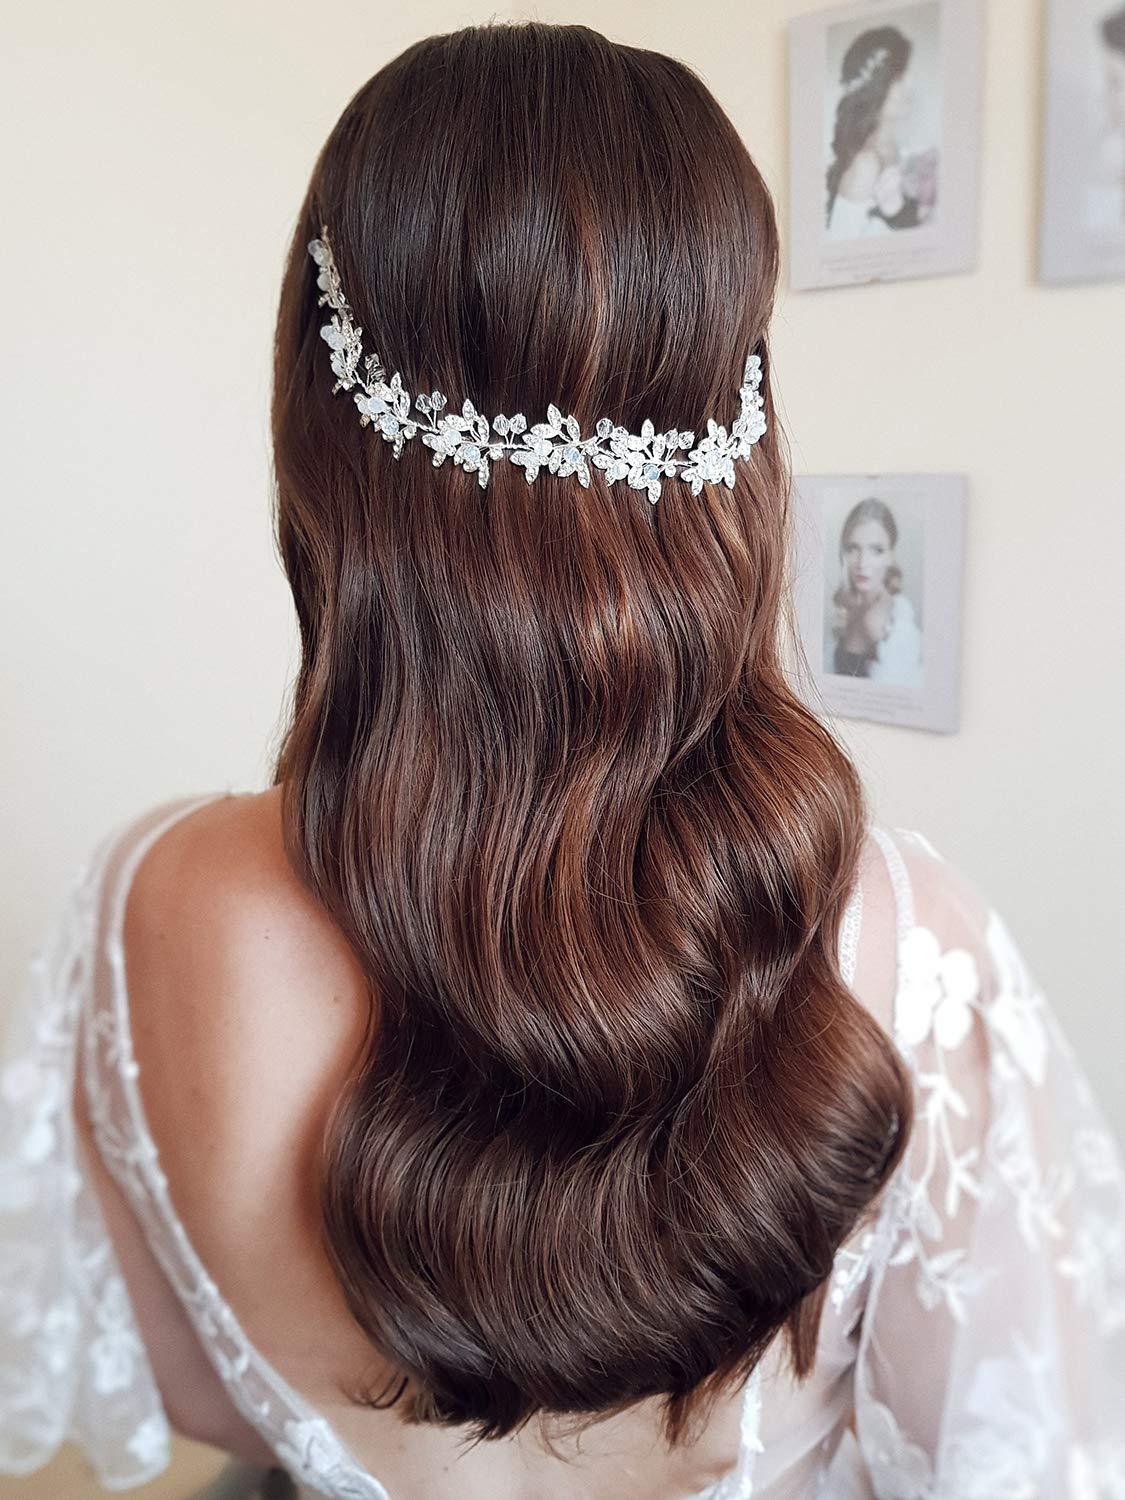 Silver Rhinestone Wedding Headband Tiara Crystal Headpiece Bridal Hair Accessories for Bride - If you say i do